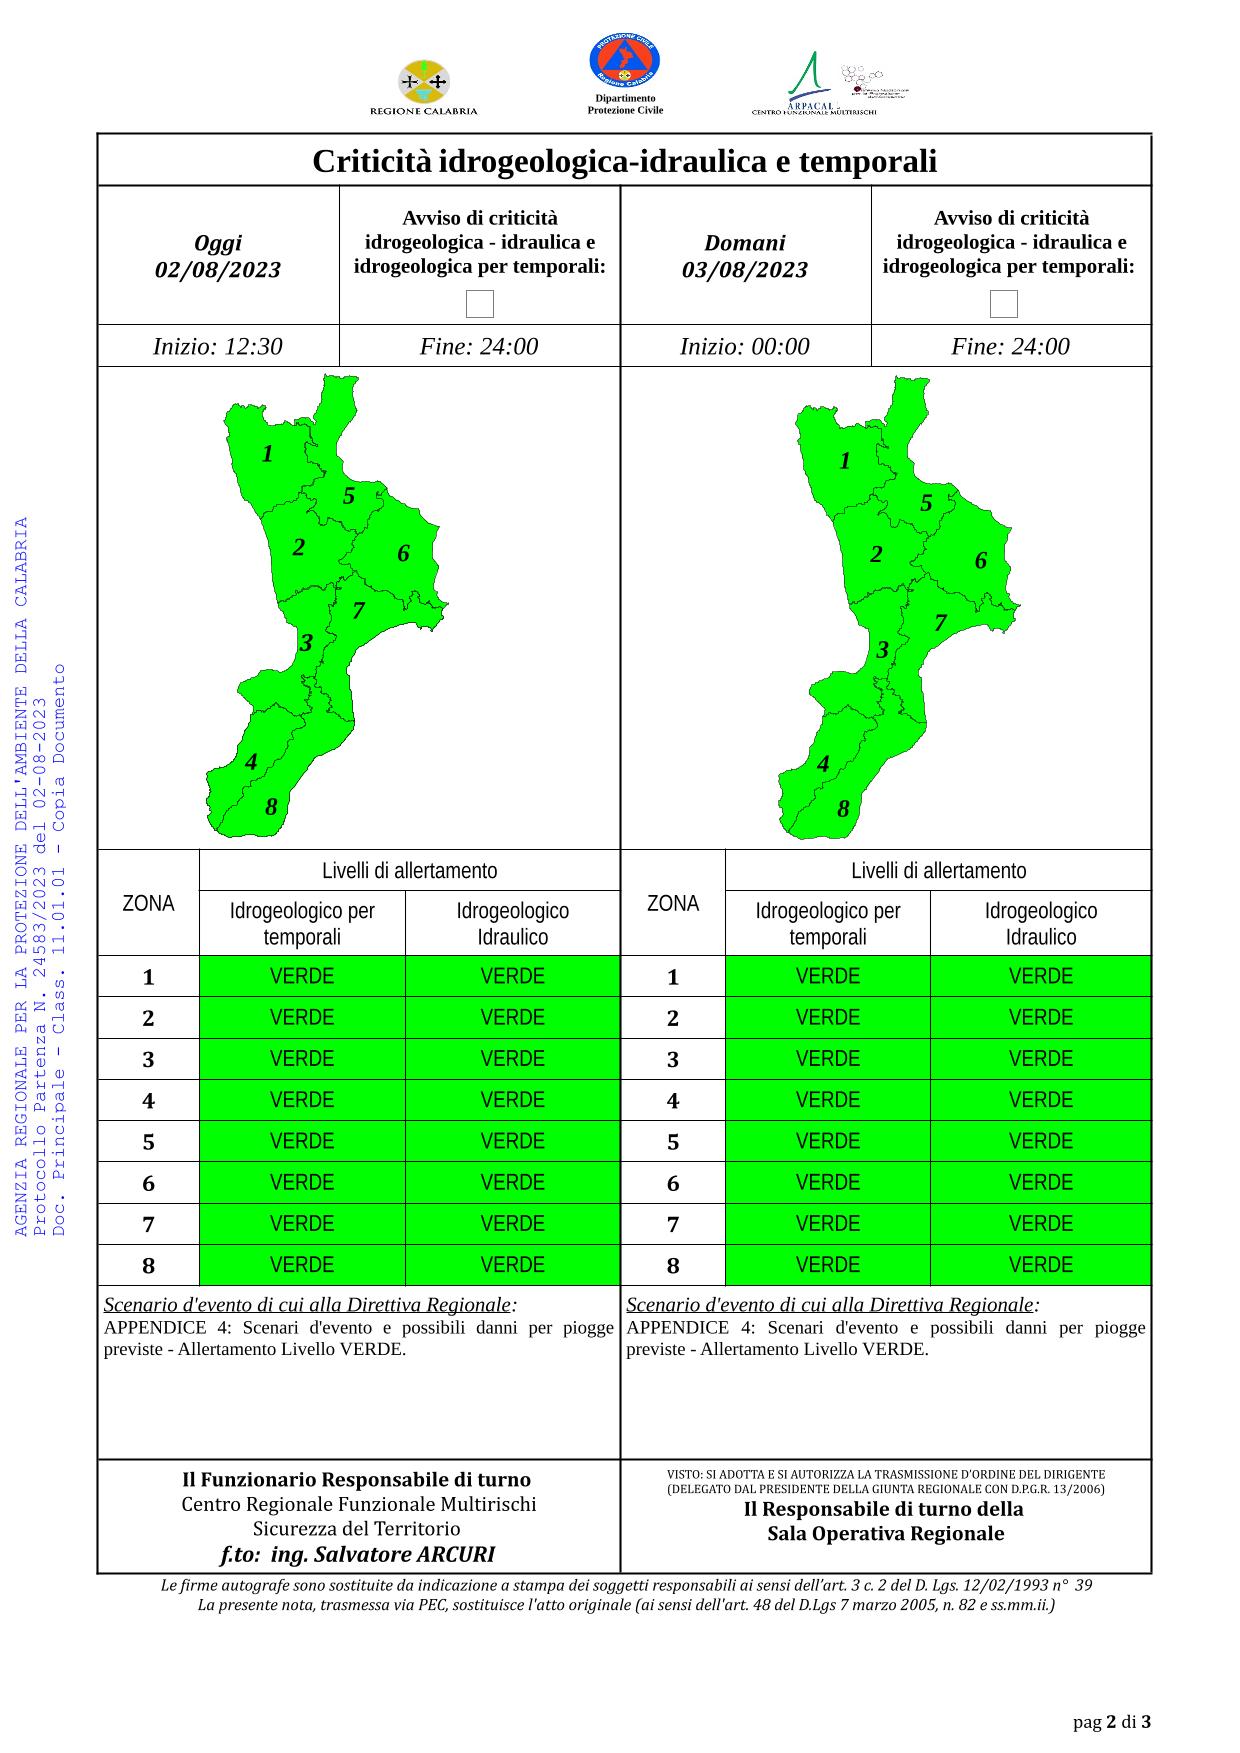 Criticità idrogeologica-idraulica e temporali in Calabria 02-08-2023